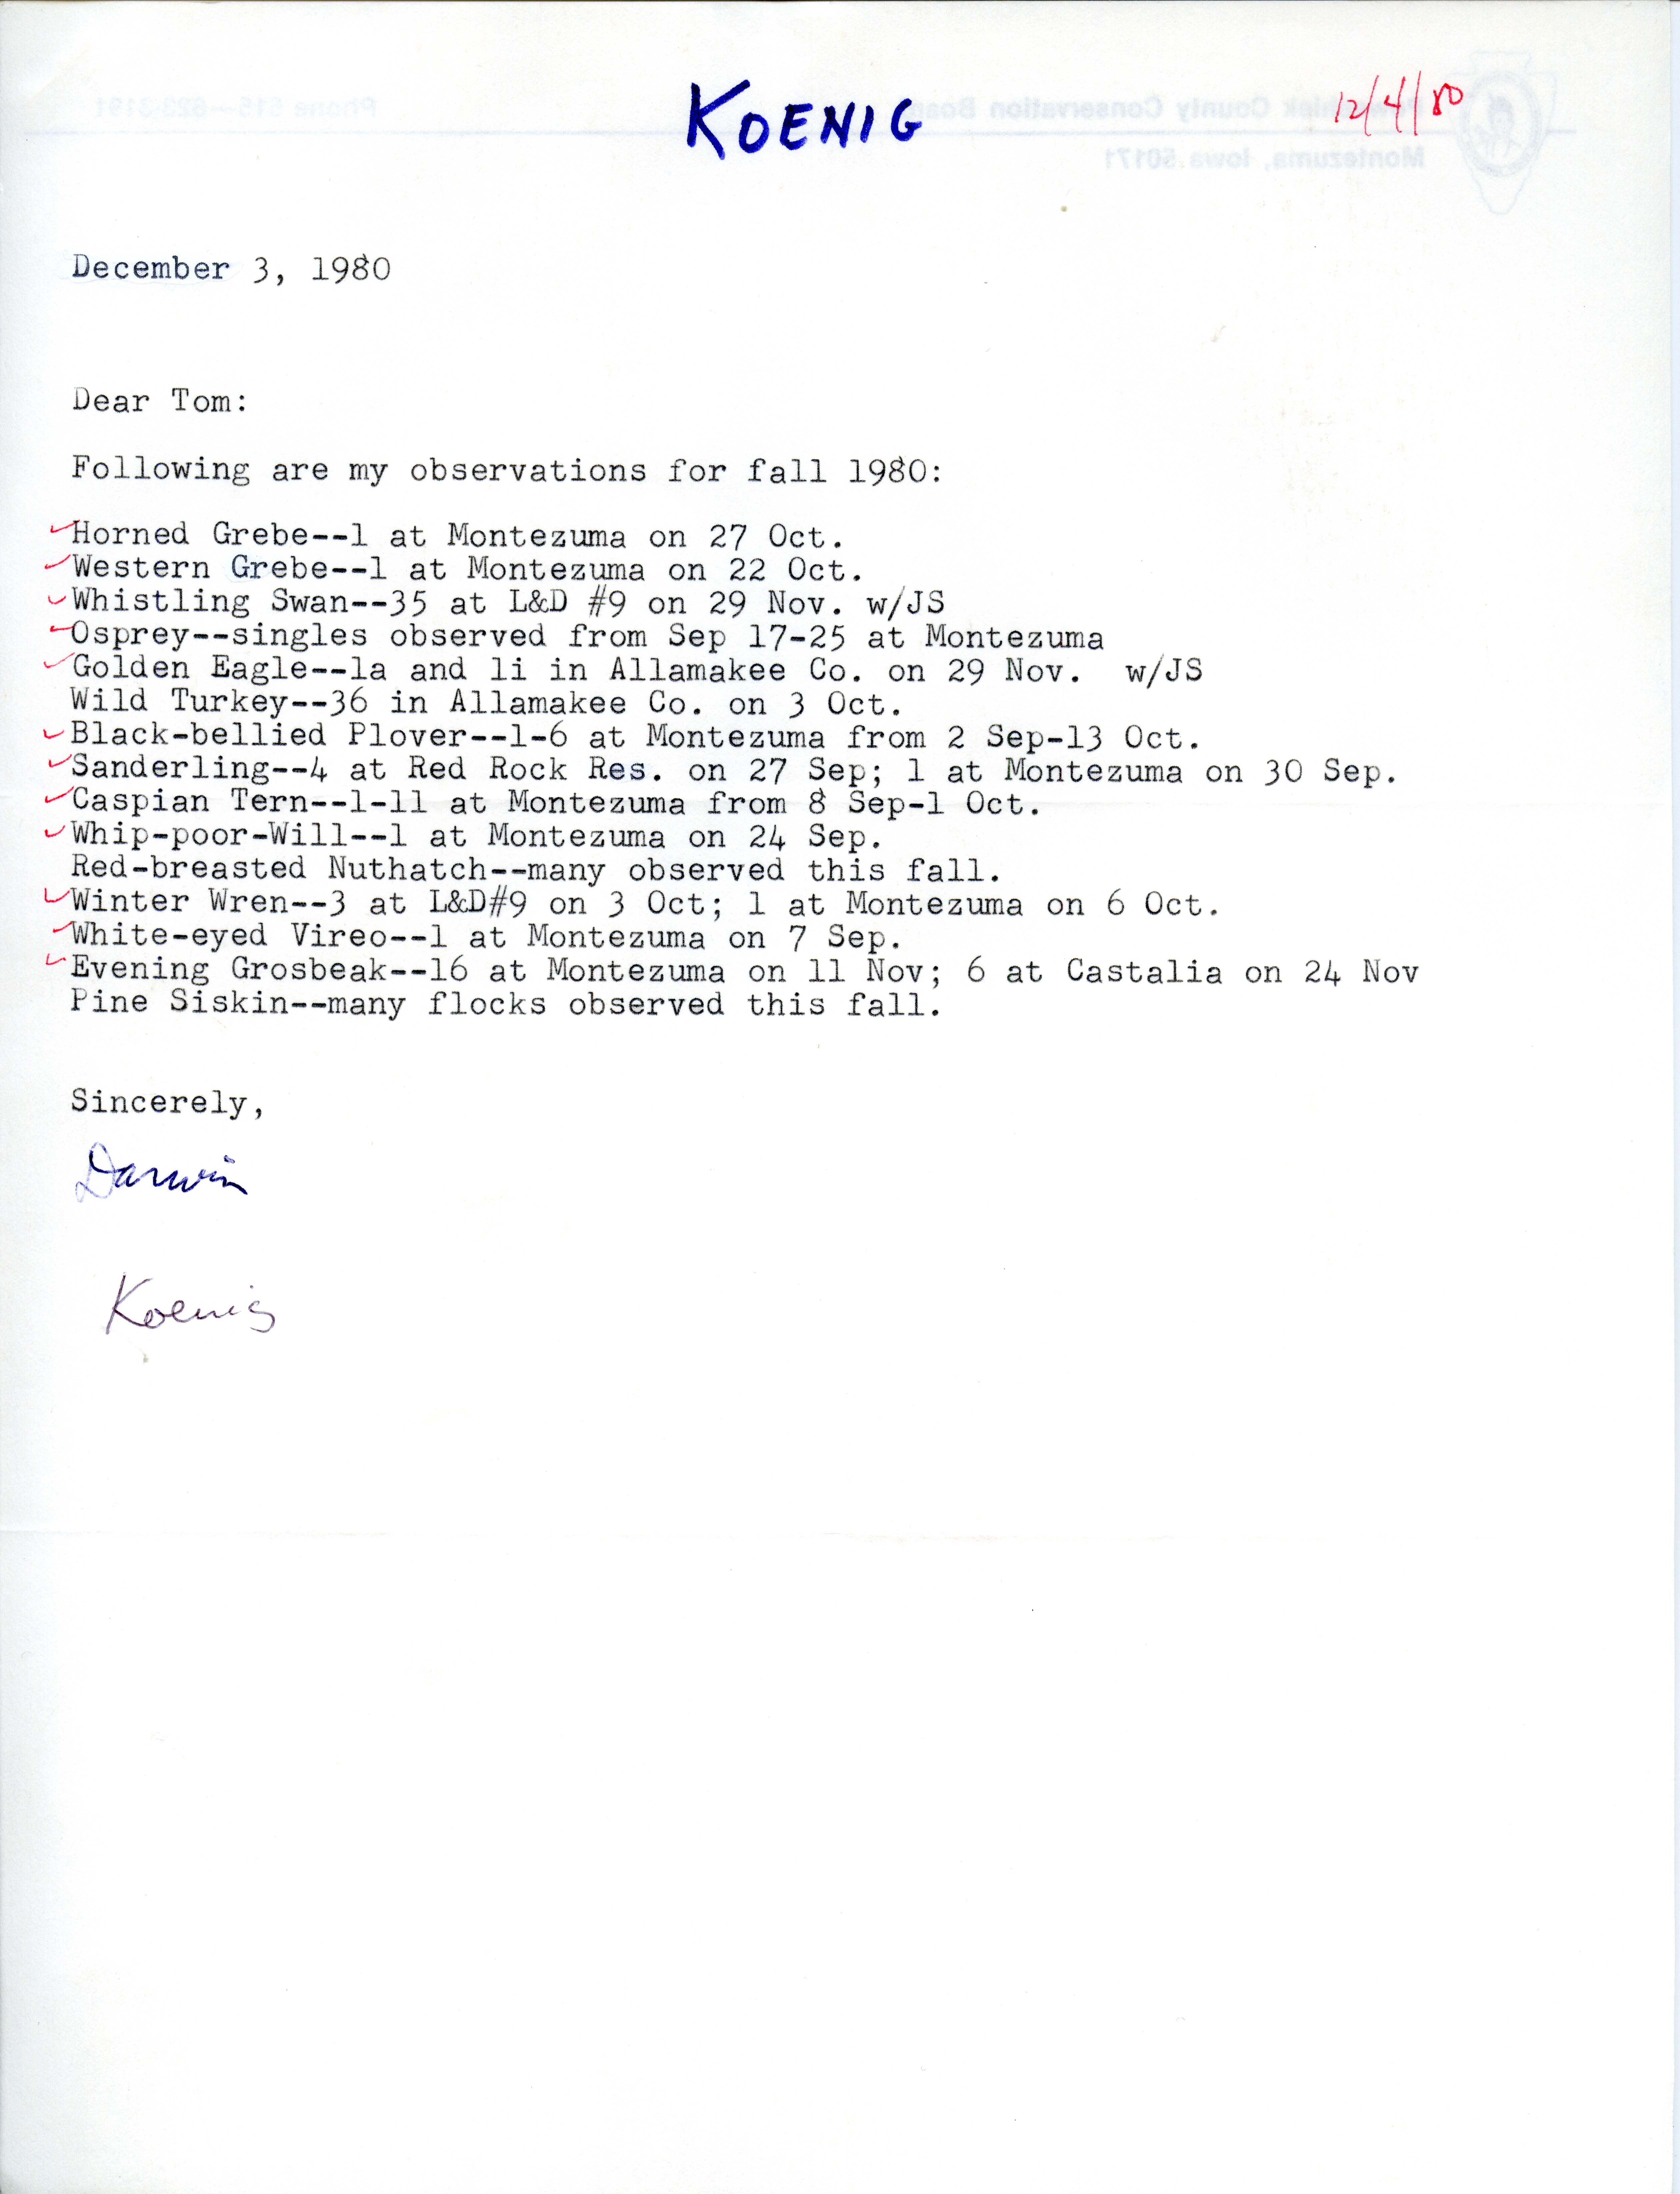 Darwin Koenig letter to Thomas Kent regarding bird sightings, December 3, 1980